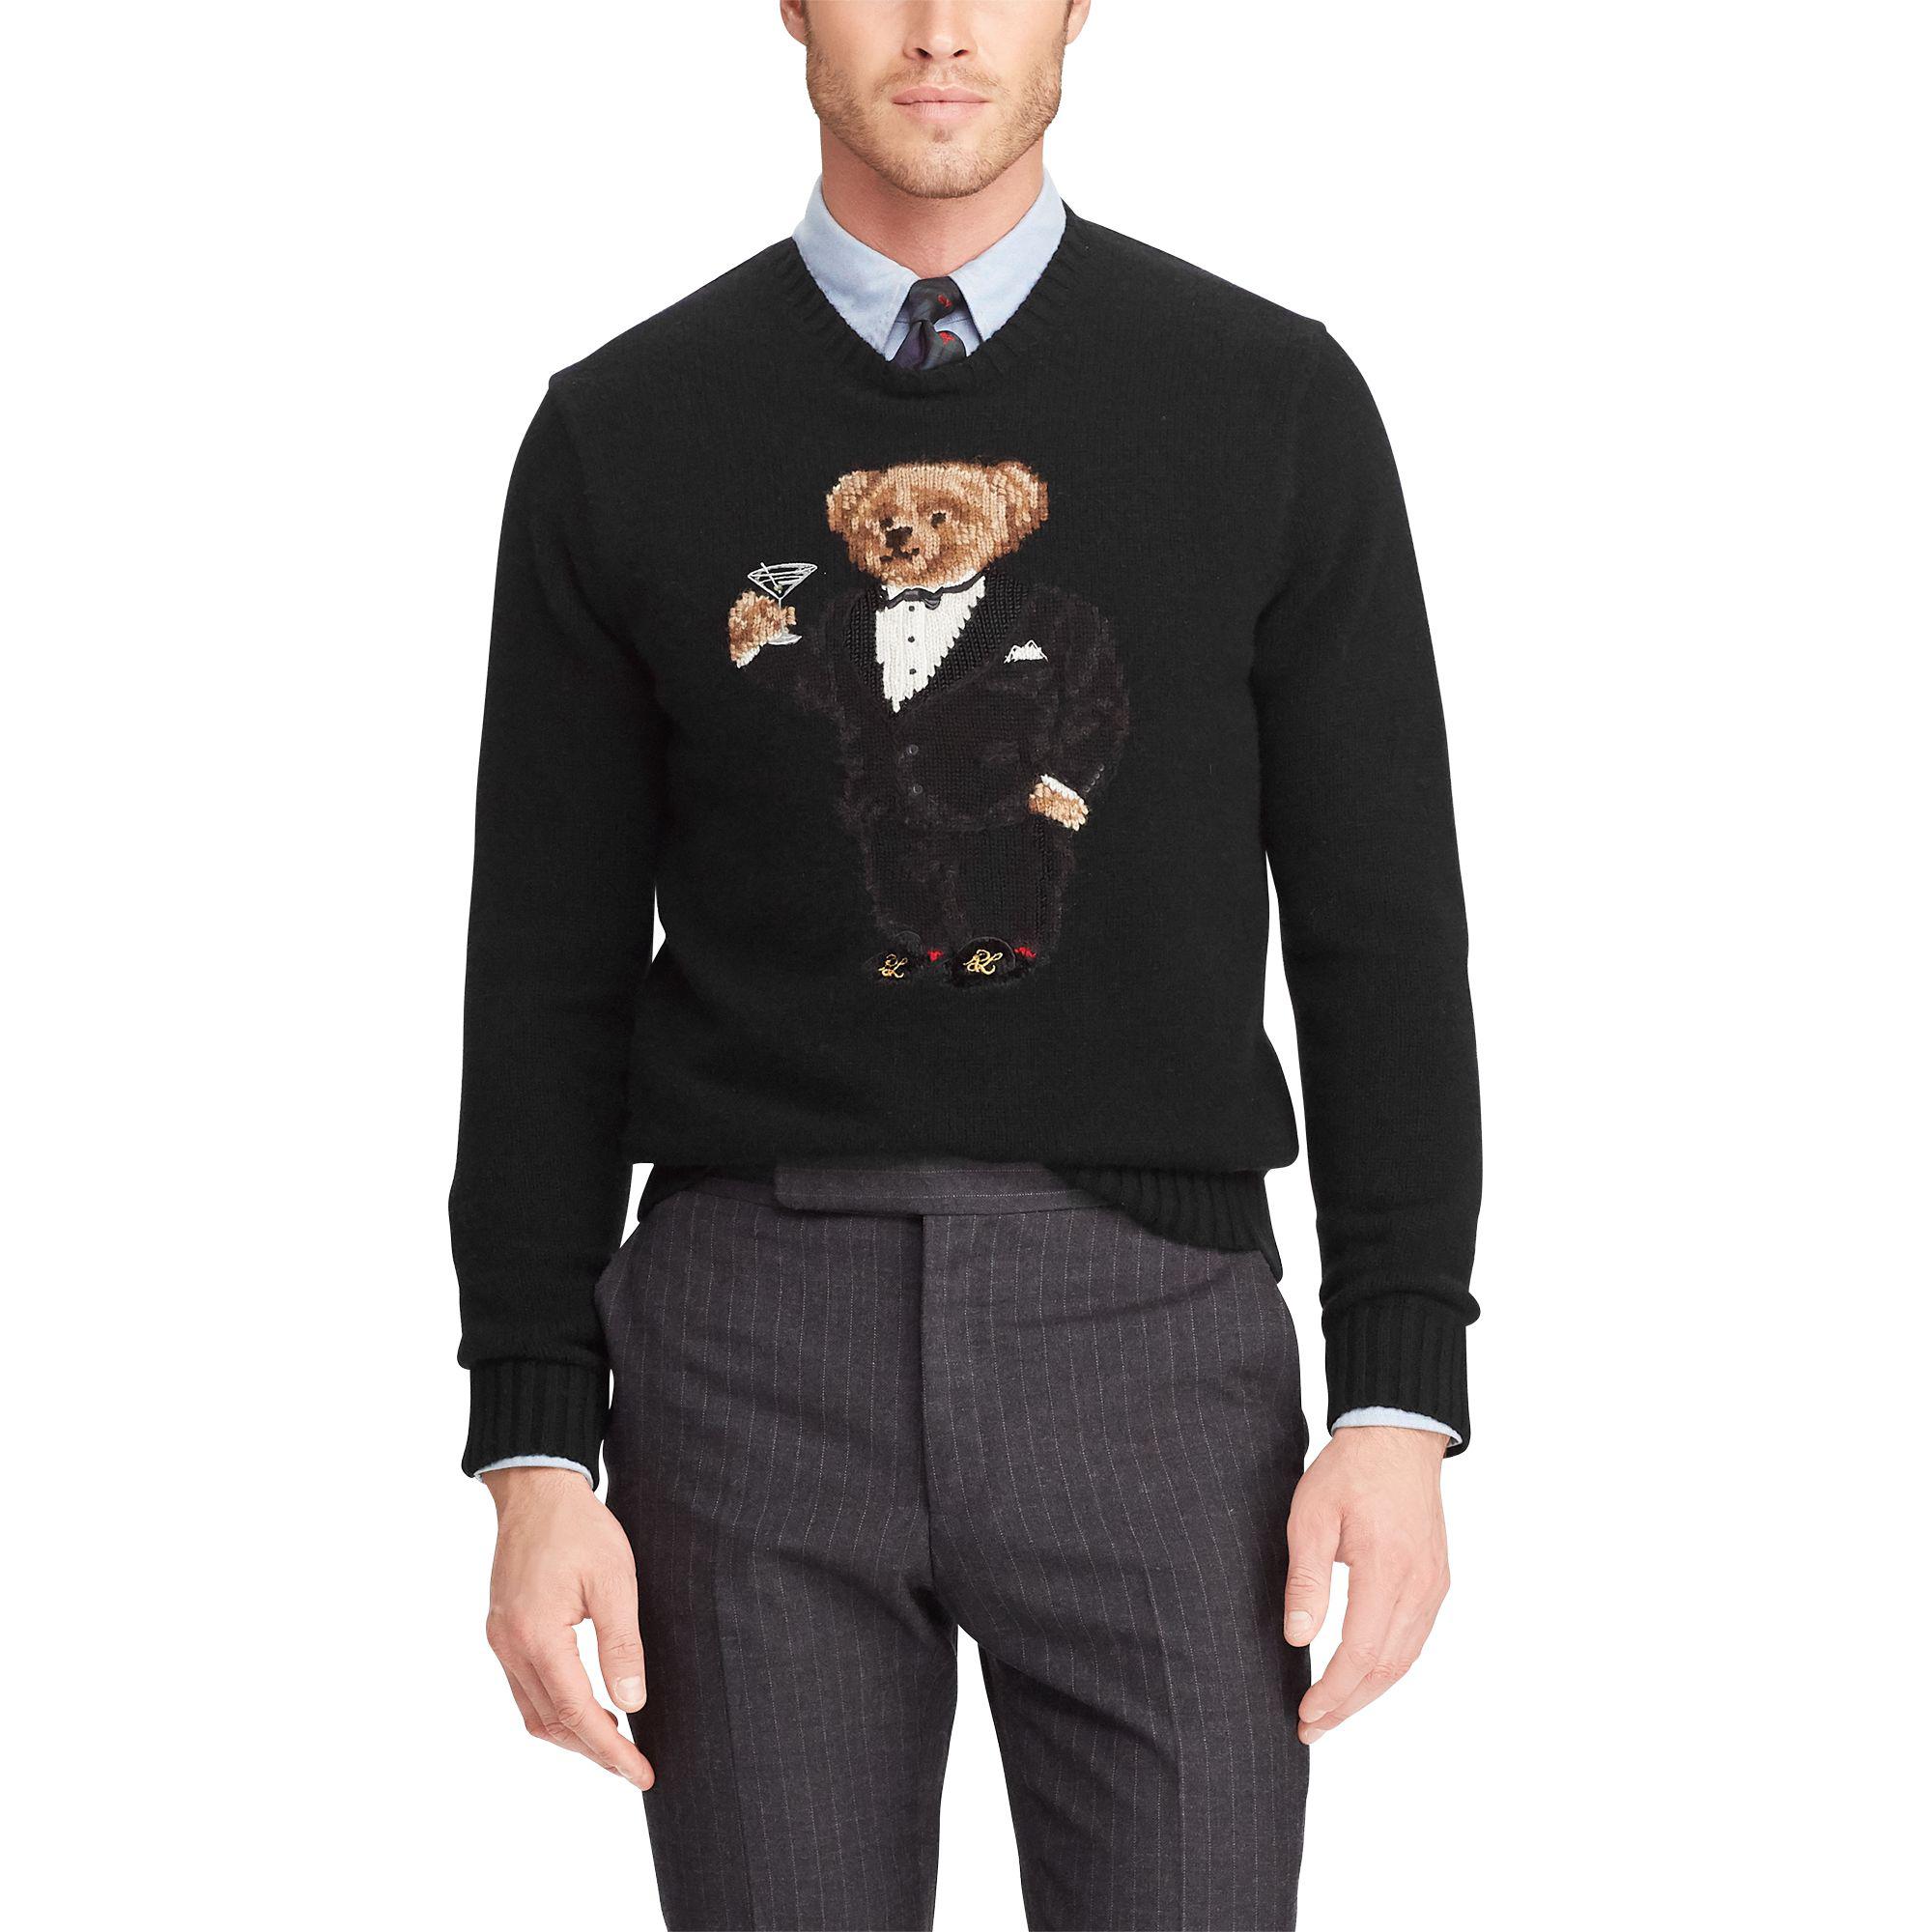 ralph lauren tuxedo martini bear sweater